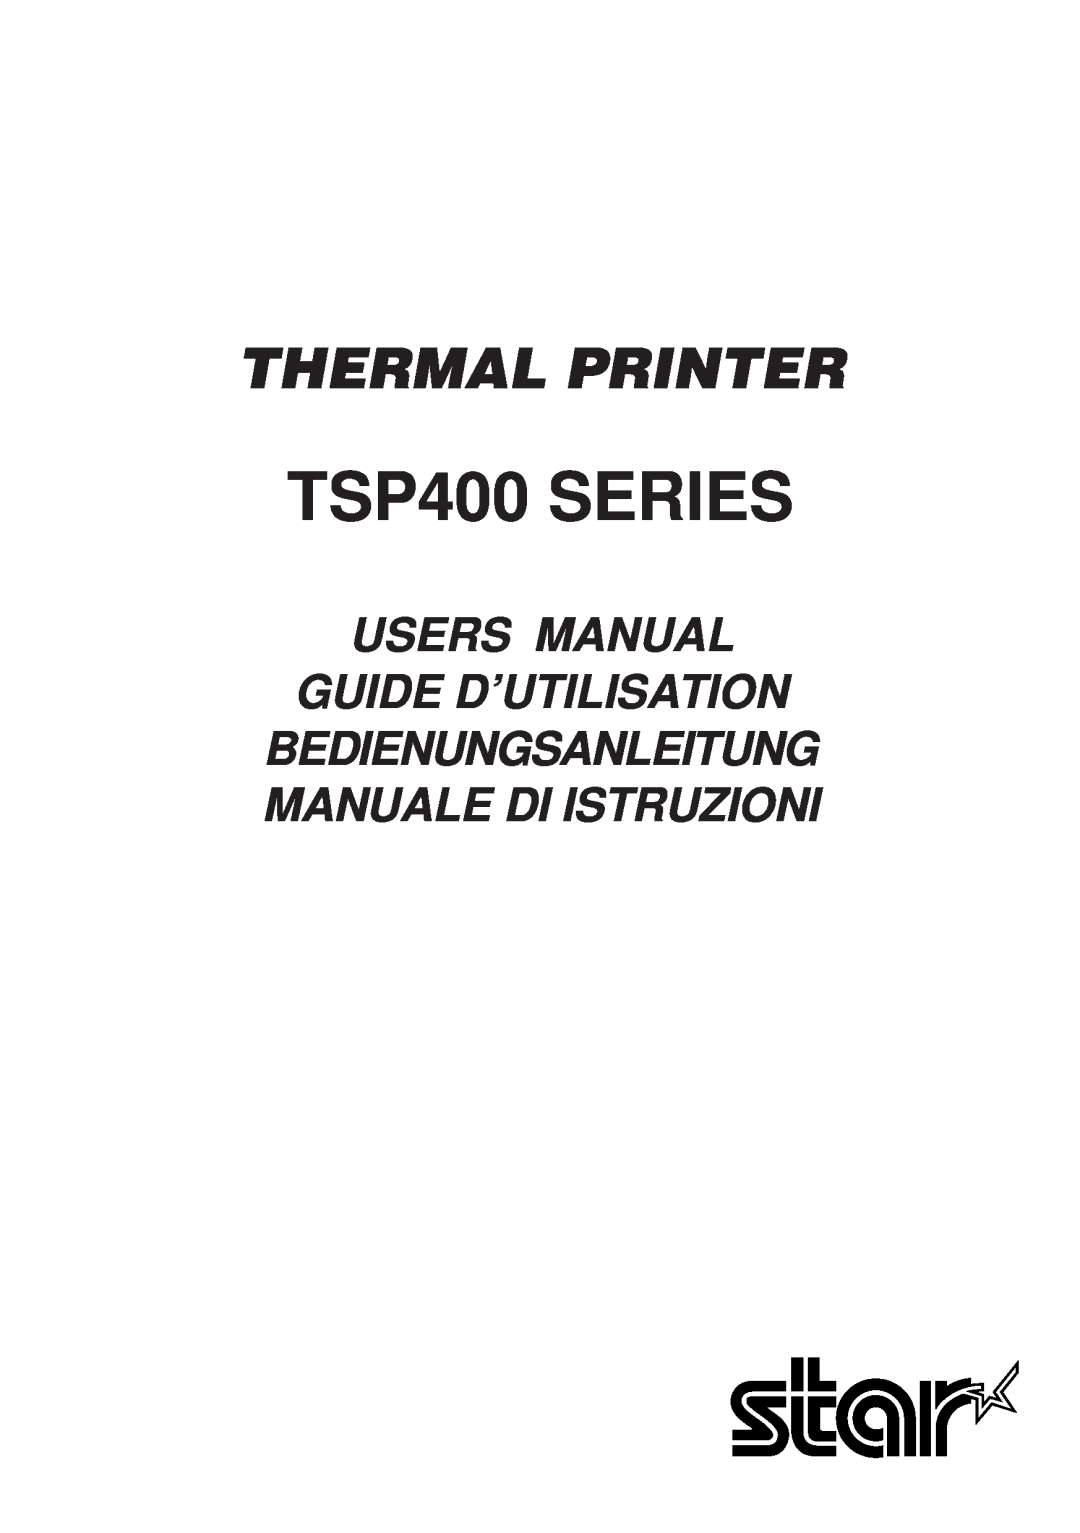 Star Micronics TSP400 Series user manual TSP400 SERIES, Thermal Printer, Bedienungsanleitung Manuale Di Istruzioni 